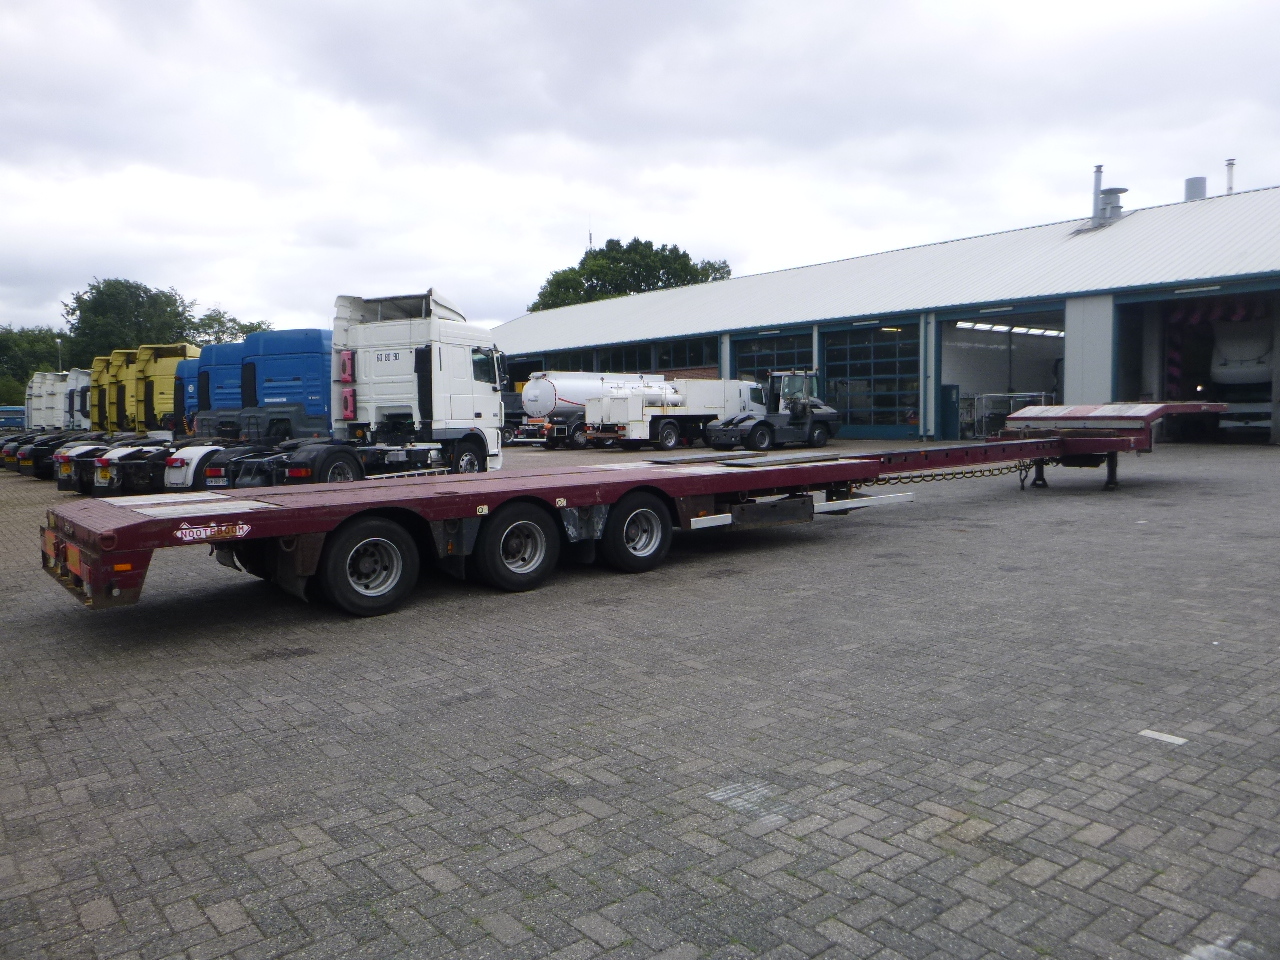 Semiremorcă transport agabaritic Nooteboom 3-axle semi-lowbed trailer extendable 14.5 m + ramps: Foto 4